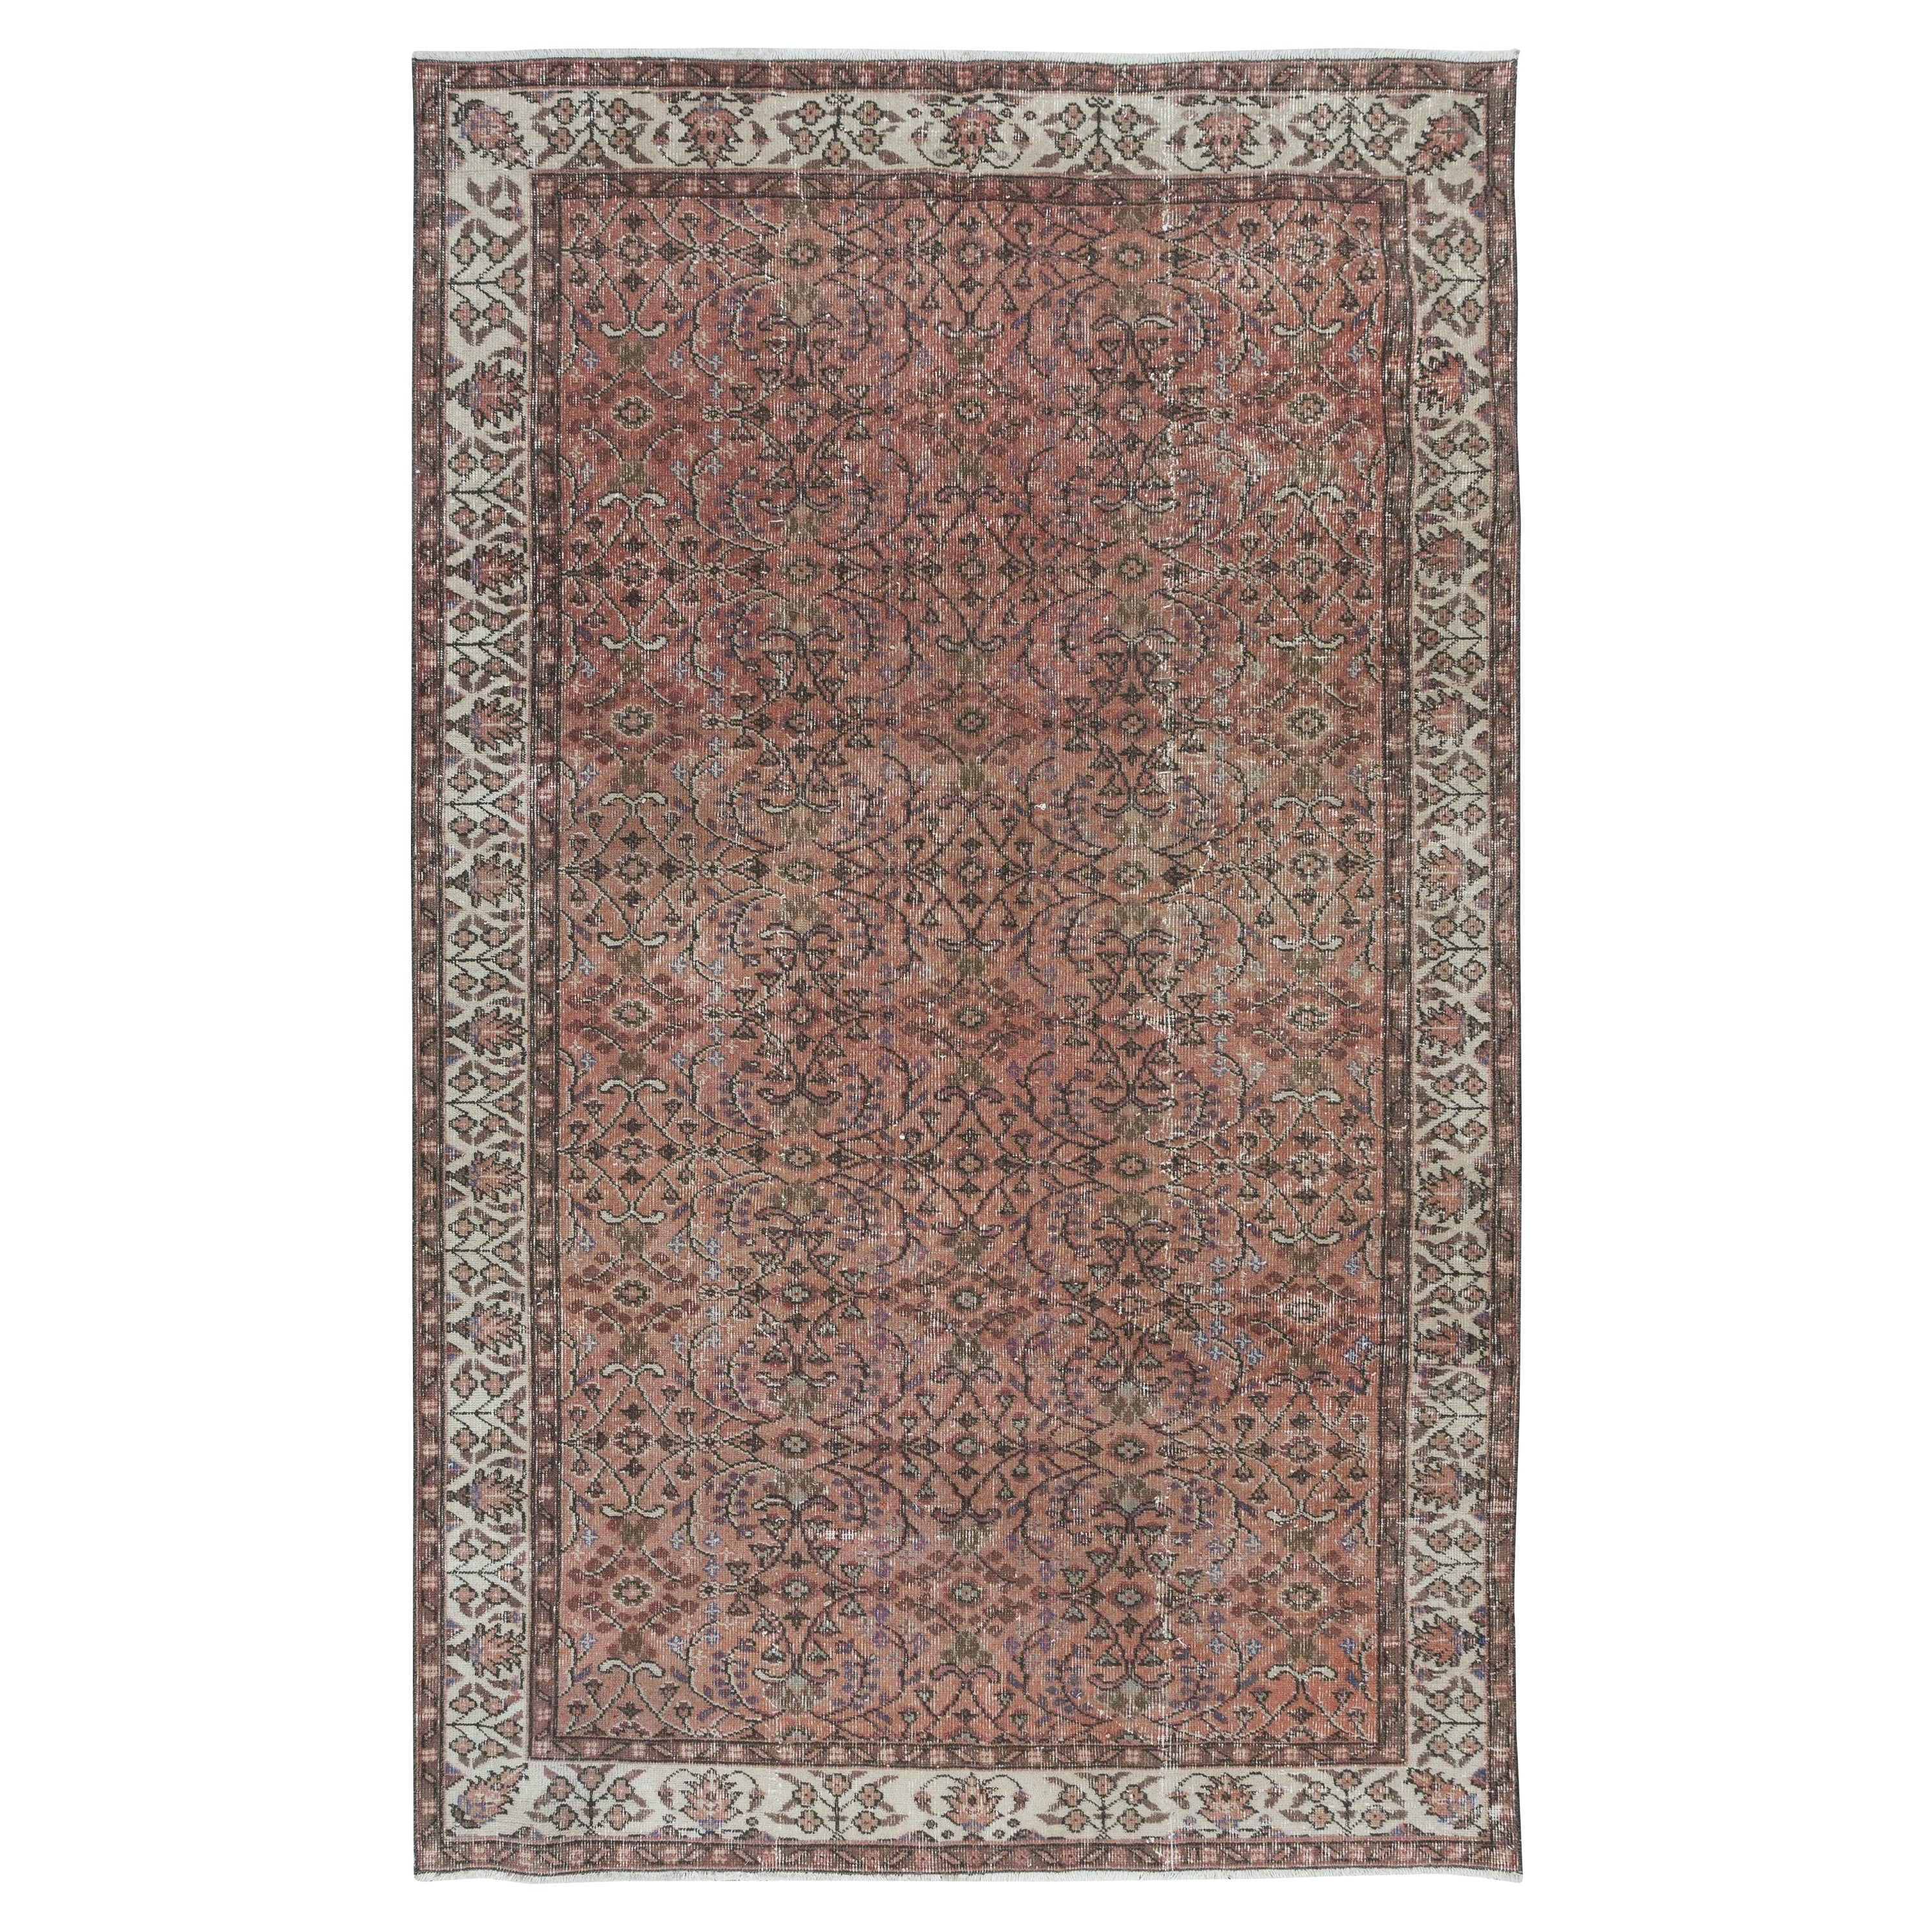 5.4x8.8 Ft Vintage Turkish Area Rug in Red & Beige, Hand Knots Rugs Floral Carpet (tapis floral noué à la main)